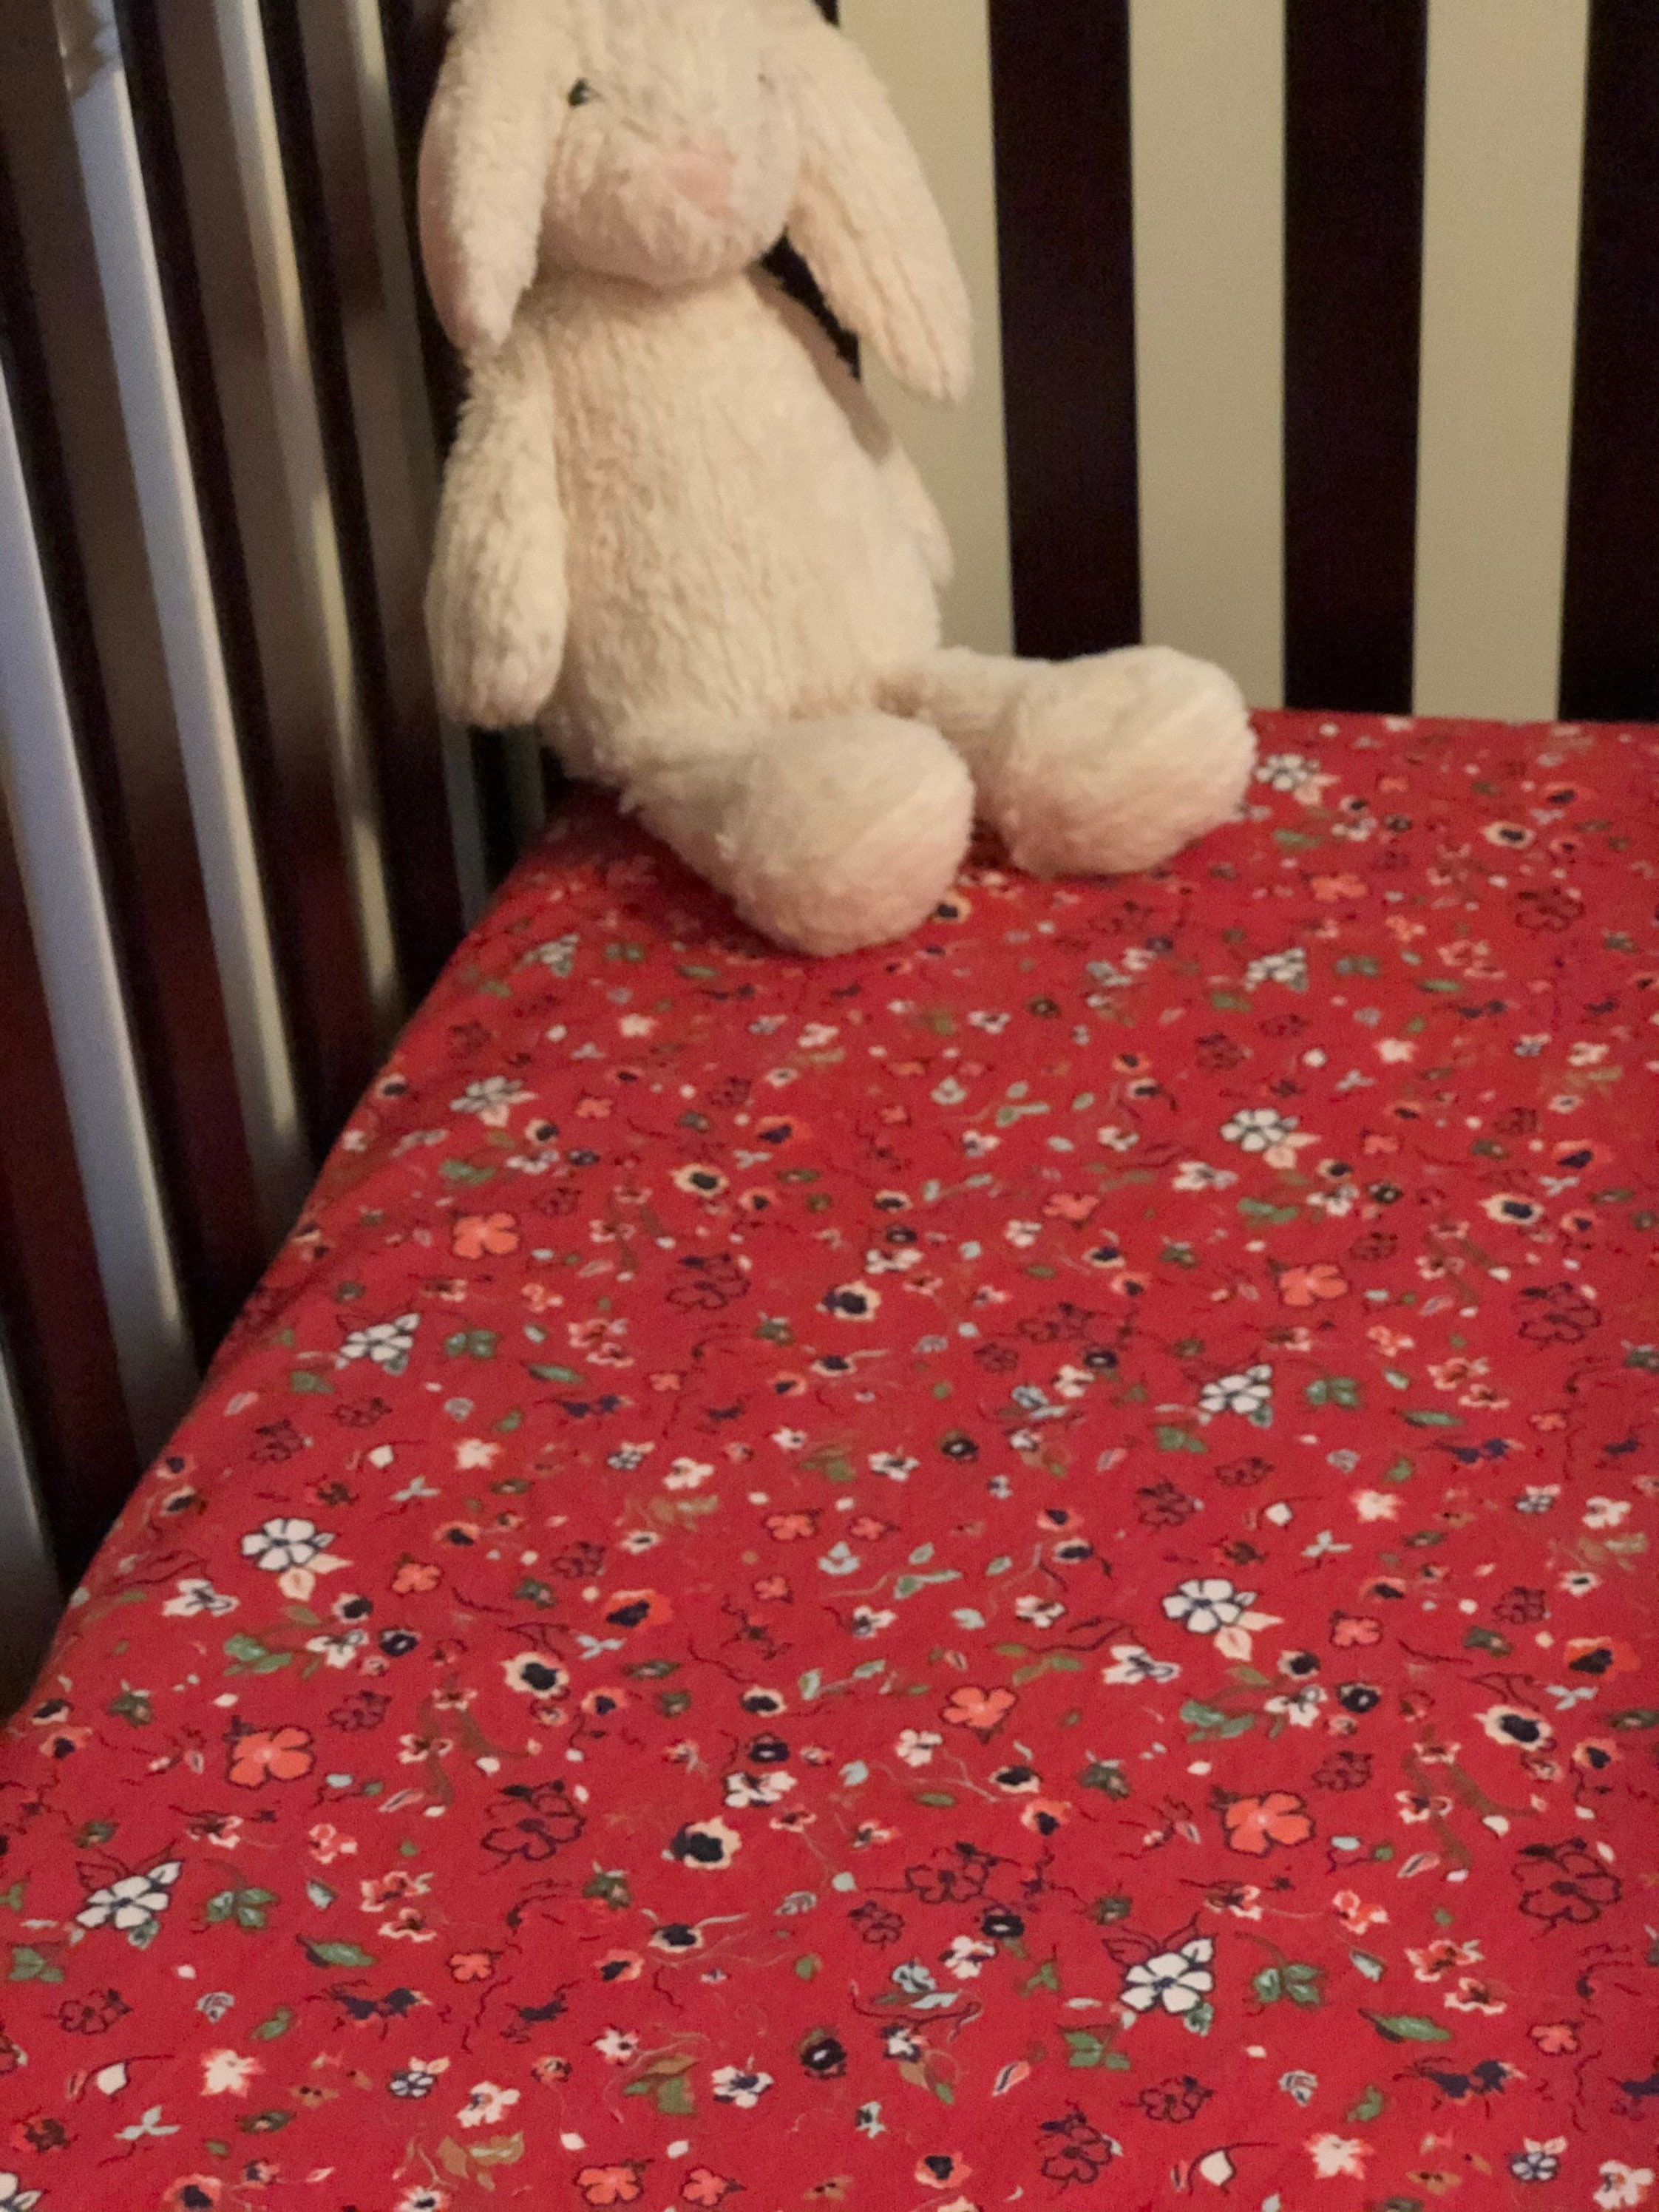 Farmhouse Baby Quilt, Flower Minky Blanket, Modern Floral Crib Bedding